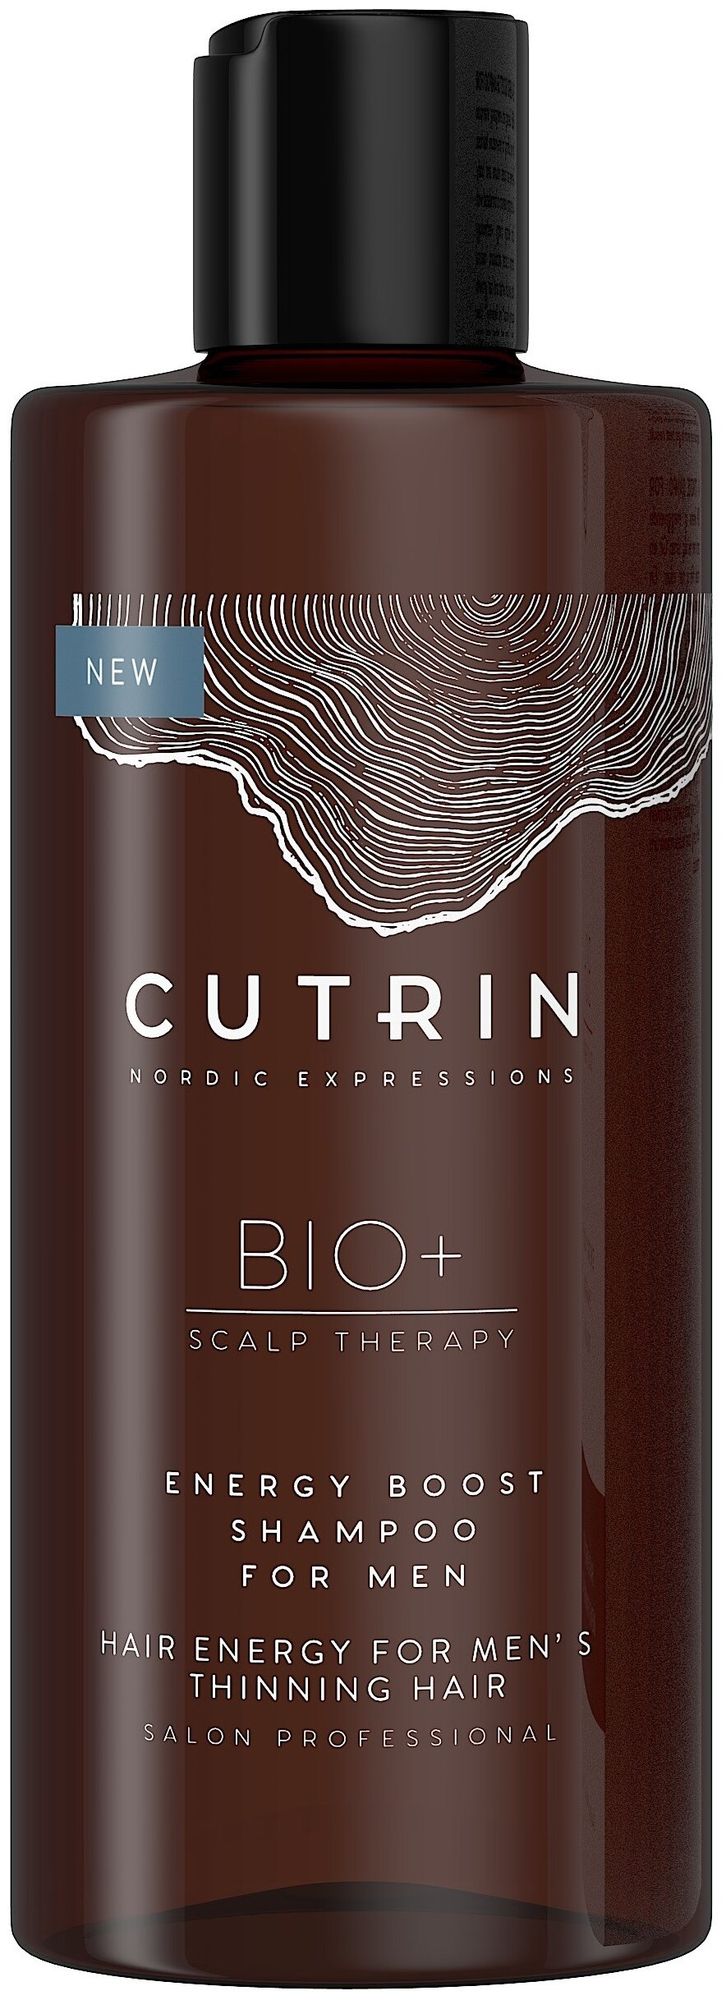 Шампунь-бустер для укрепления волос у мужчин CUTRIN PROFESSIONAL BIO+ 2019 Energy Boost, 250 мл